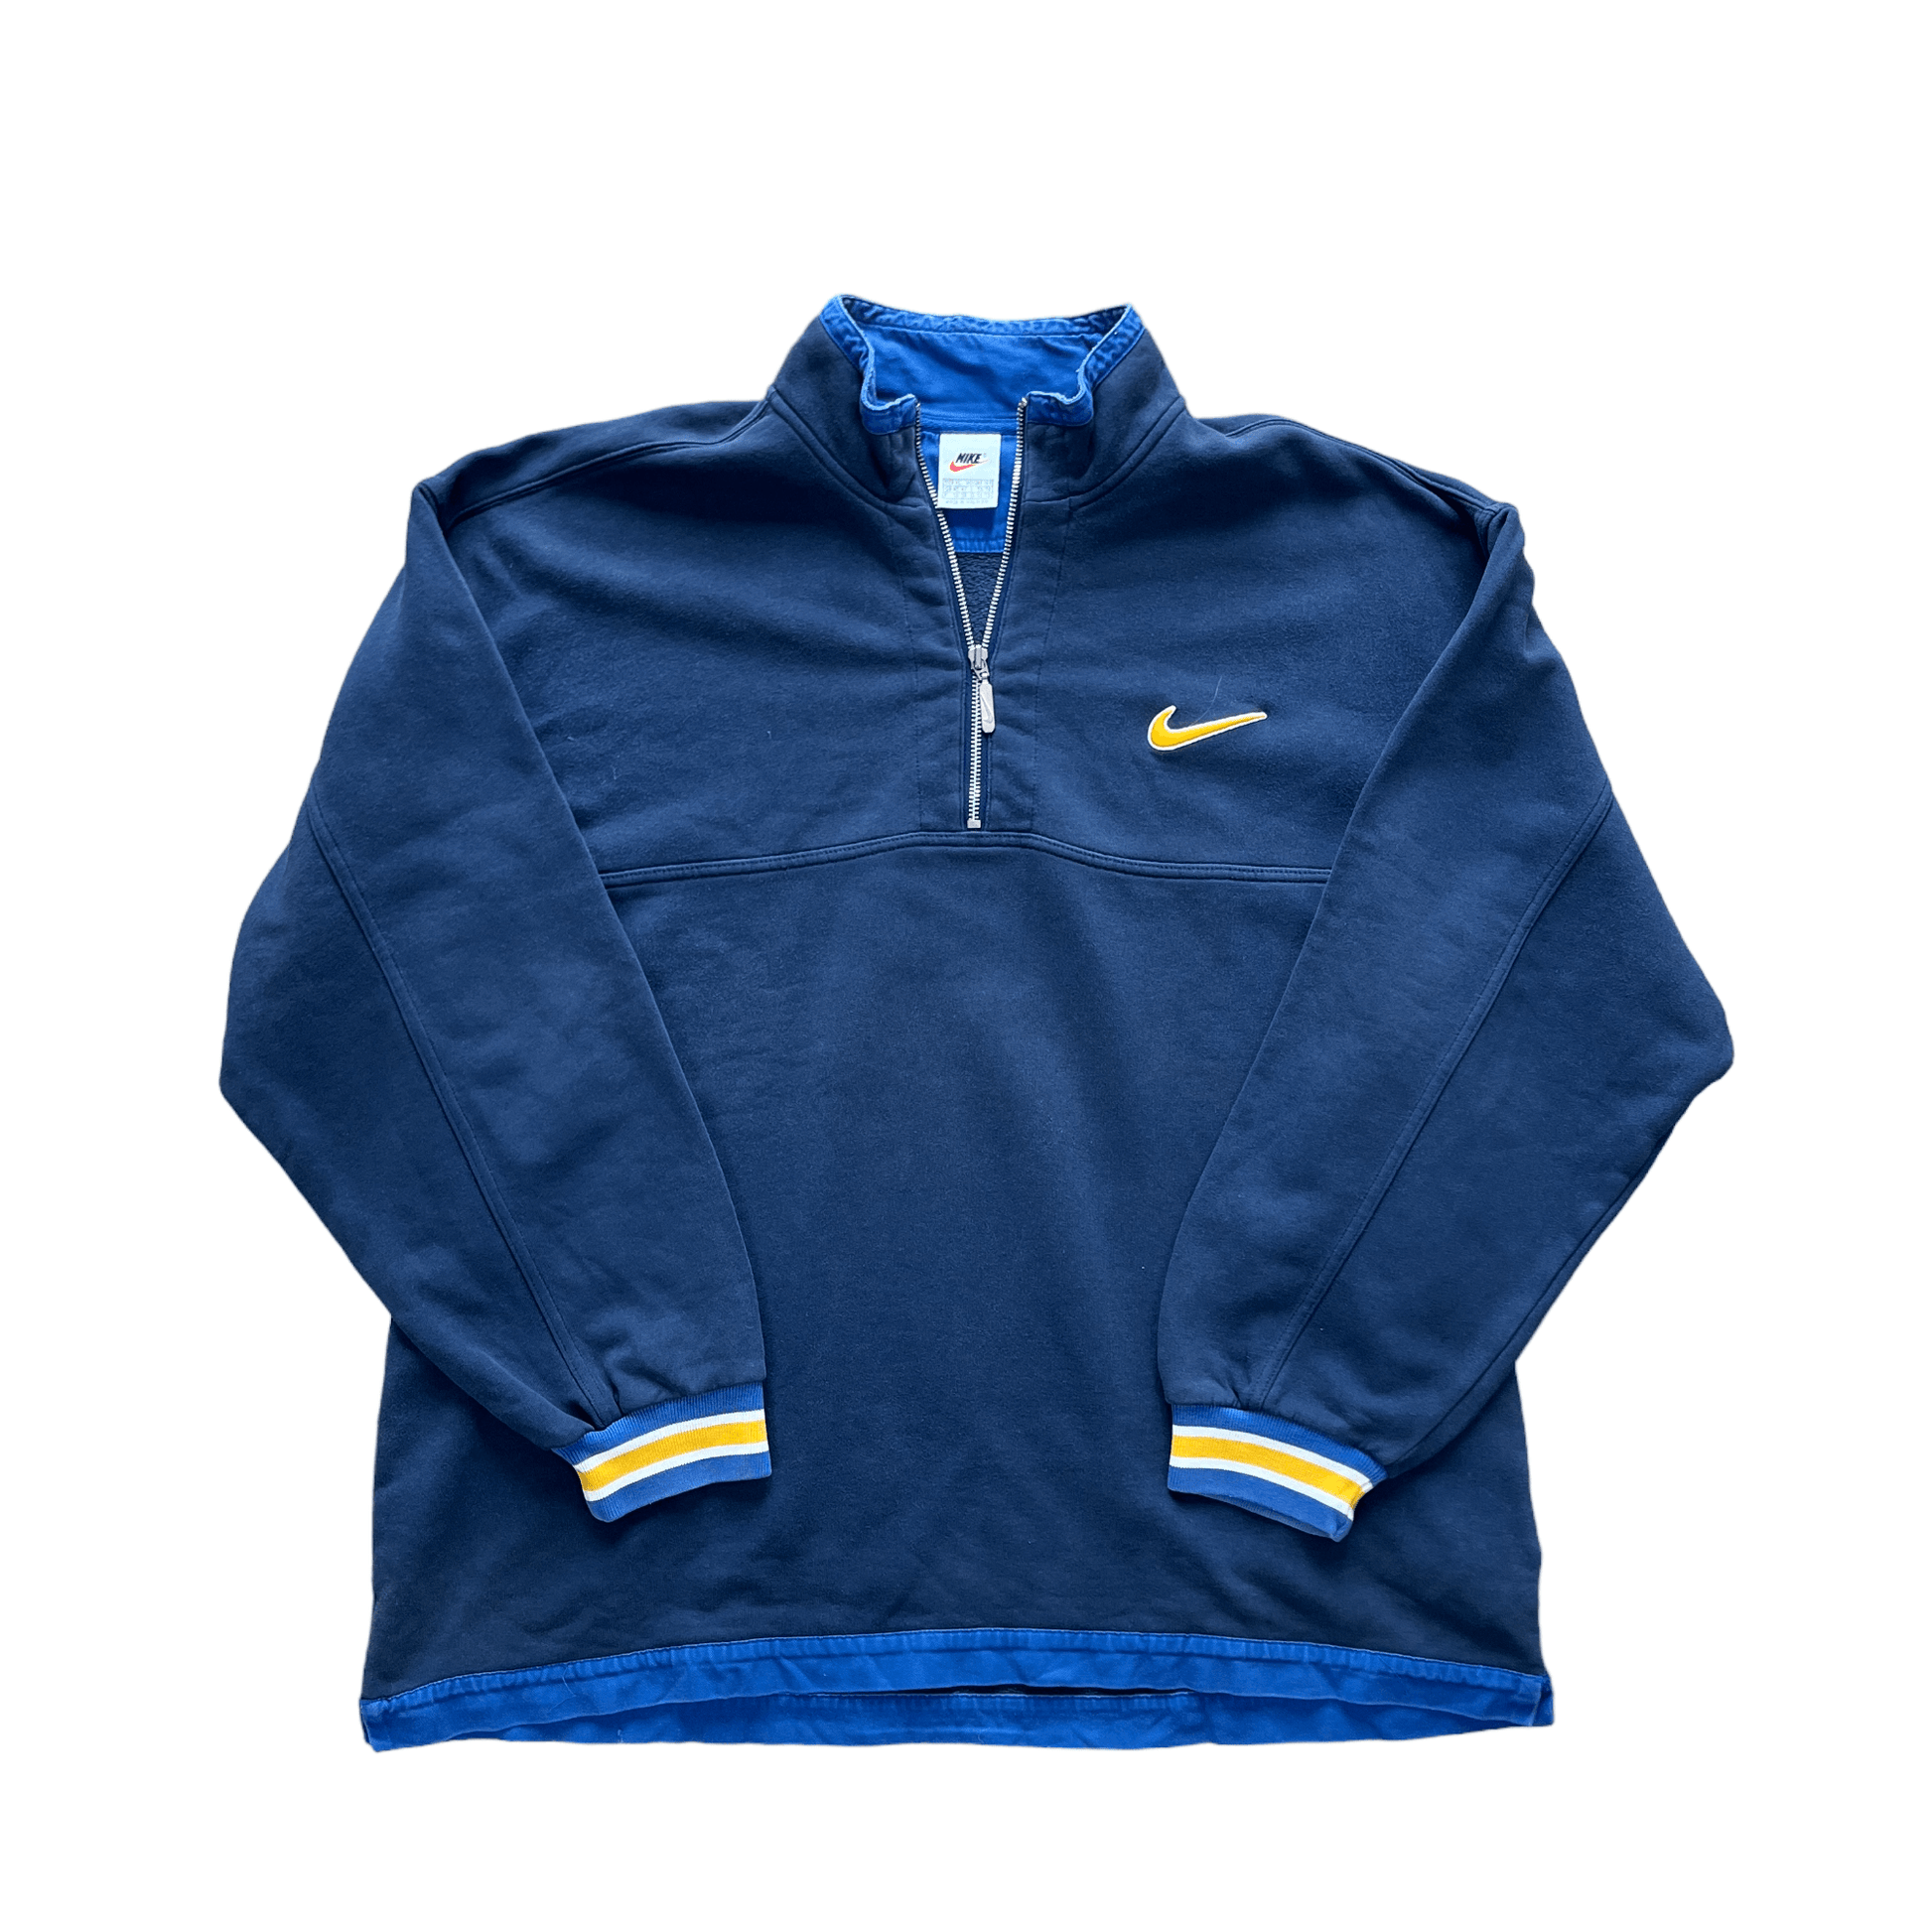 Vintage 90s Navy Blue Nike Quarter Zip Sweatshirt - Extra Large - The Streetwear Studio